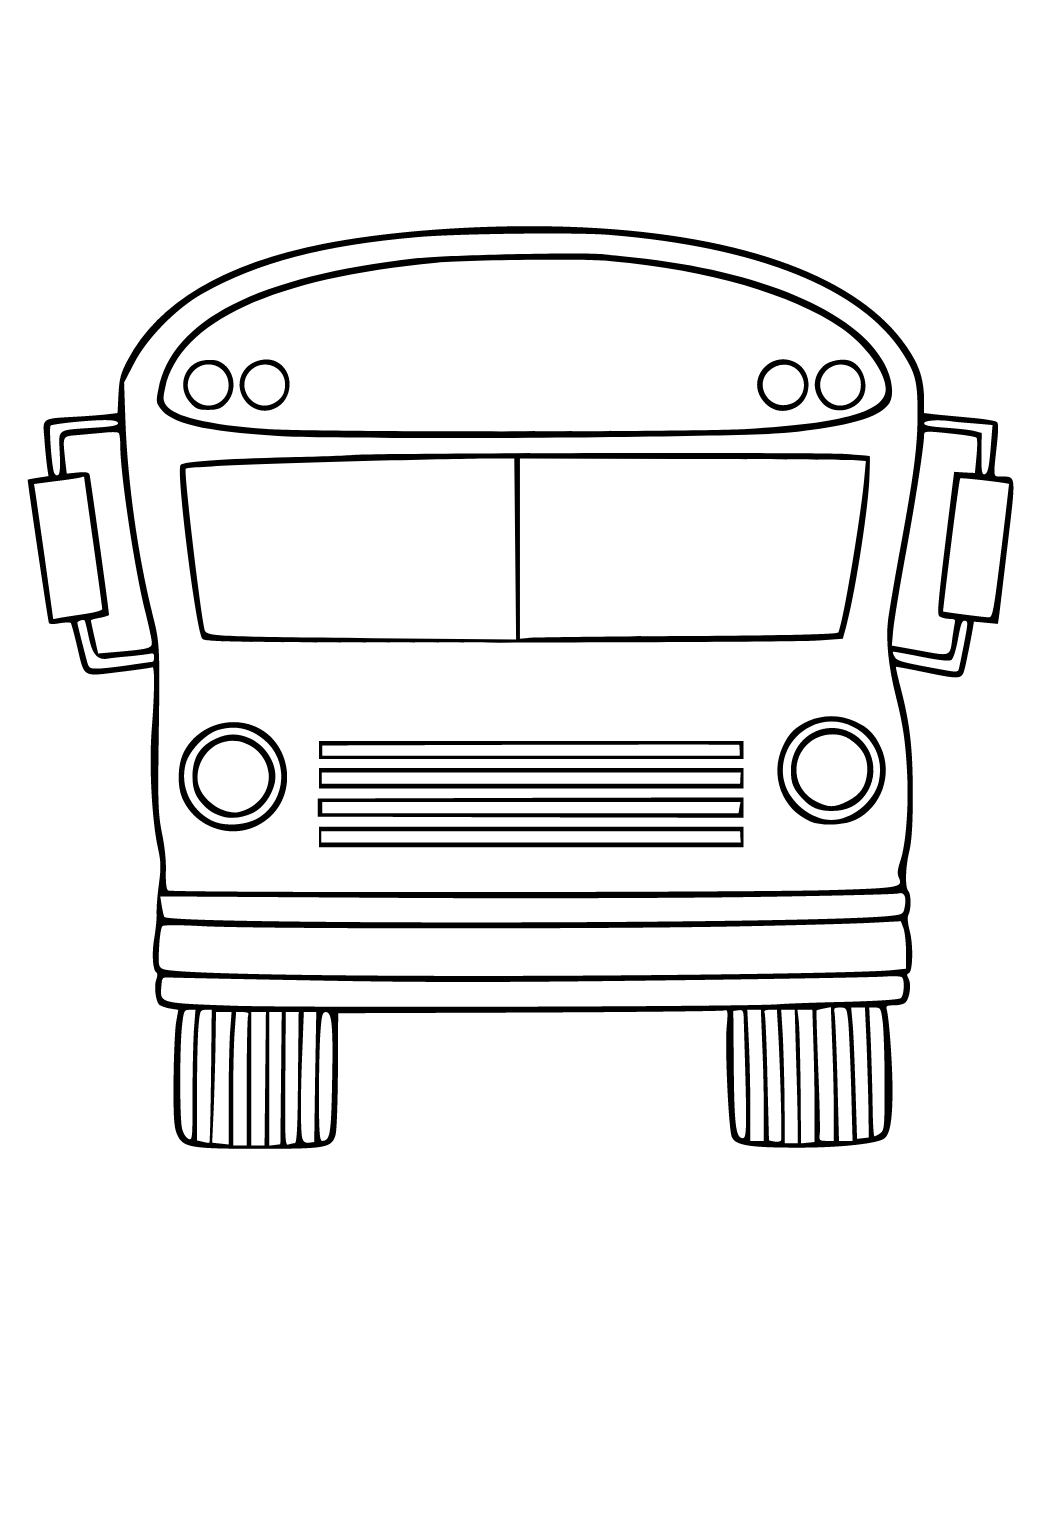 Autobús Escolar